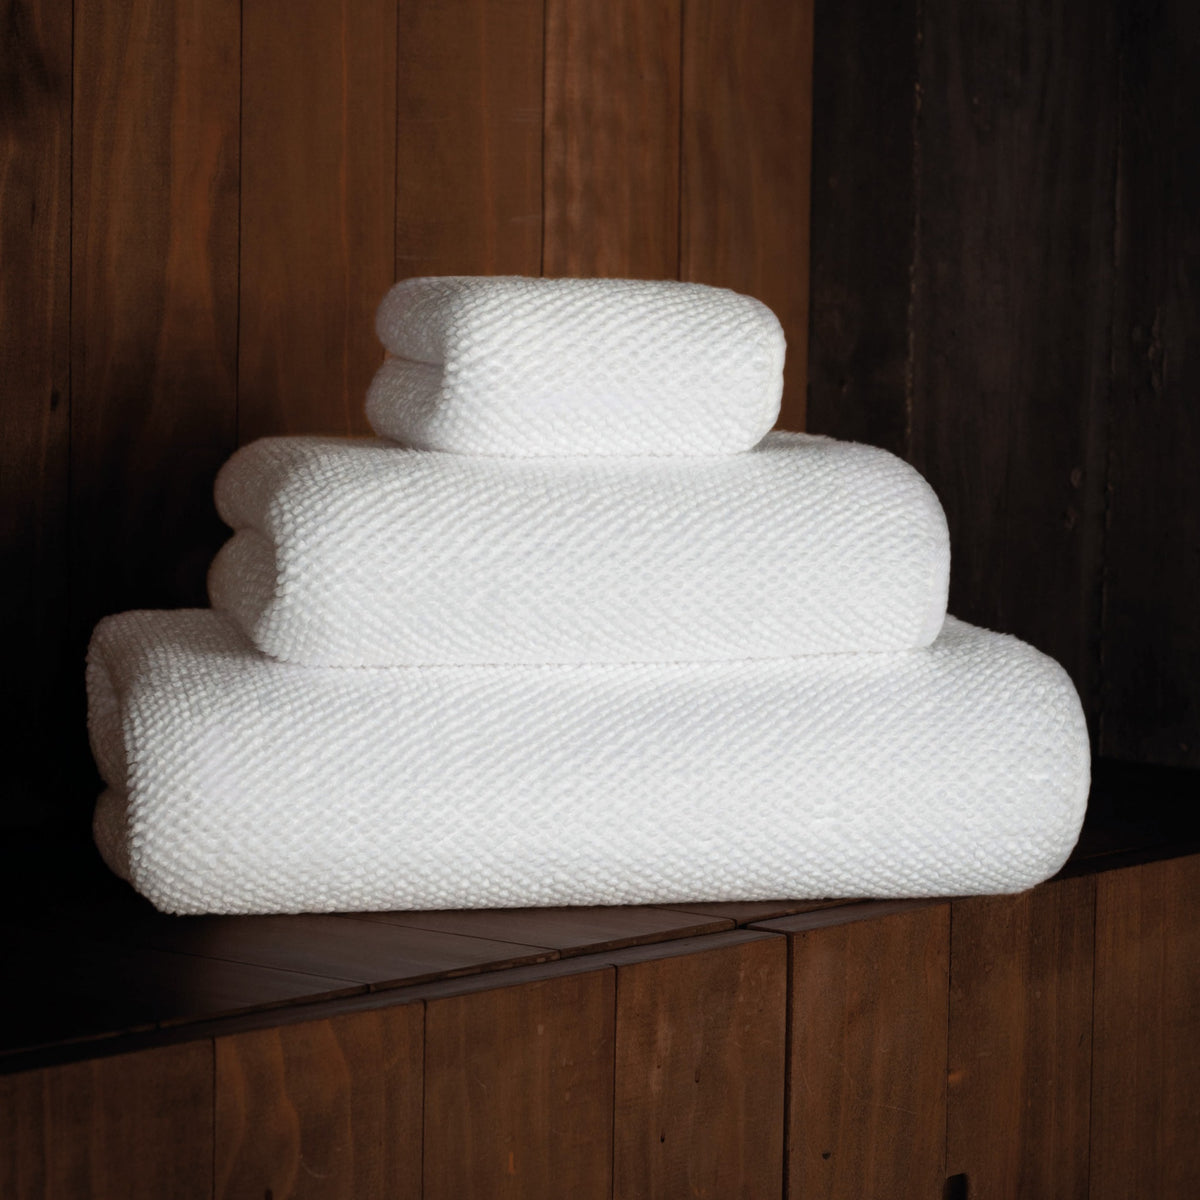 Folded Graccioza Pearls Bath Towels in White Color